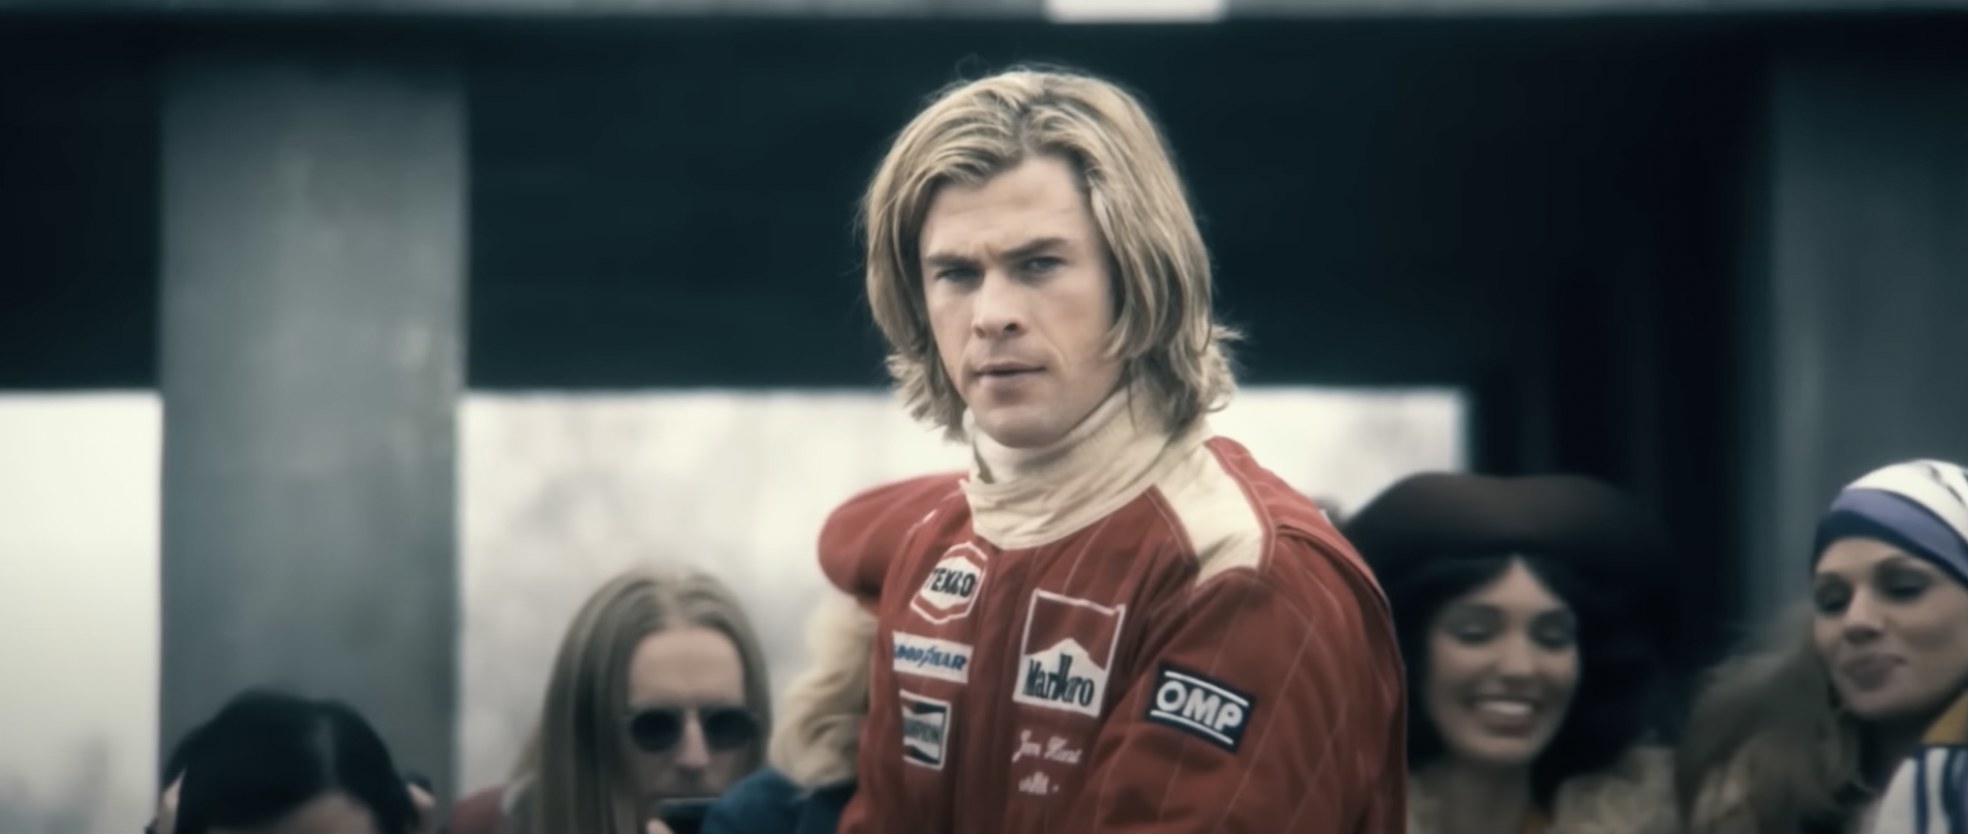 Chris Hemsworth as a racer